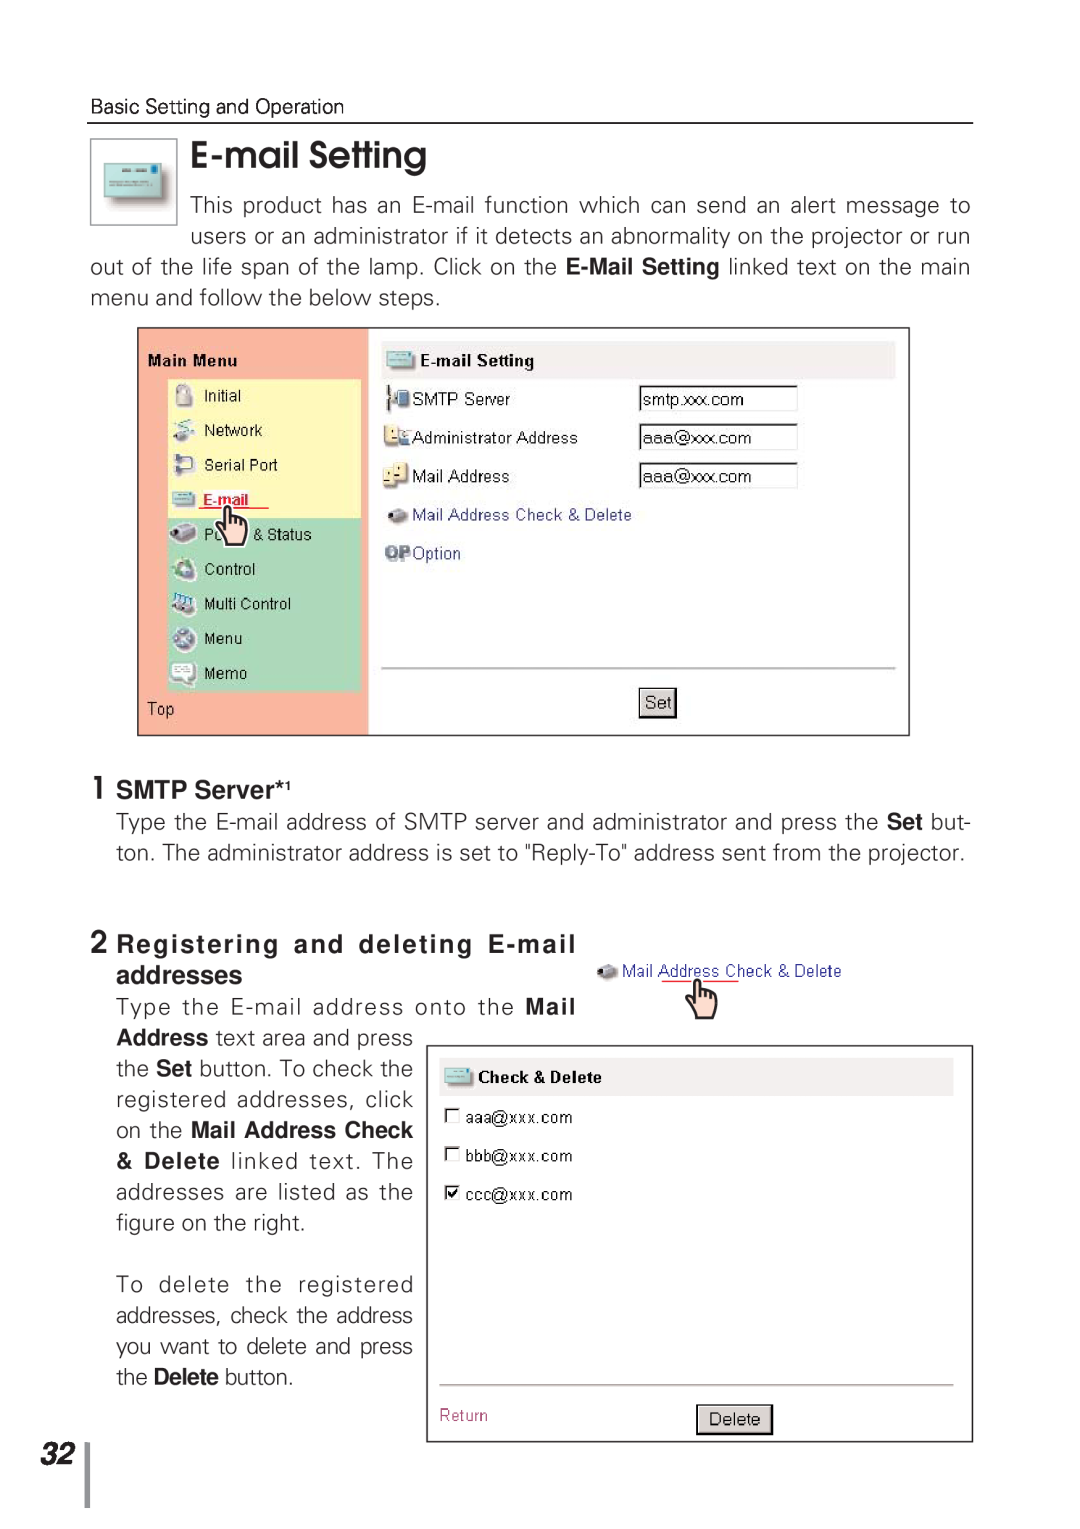 Eiki MD13NET owner manual E-mailSetting, SMTP Server*1, Registering and deleting E-mailaddresses 